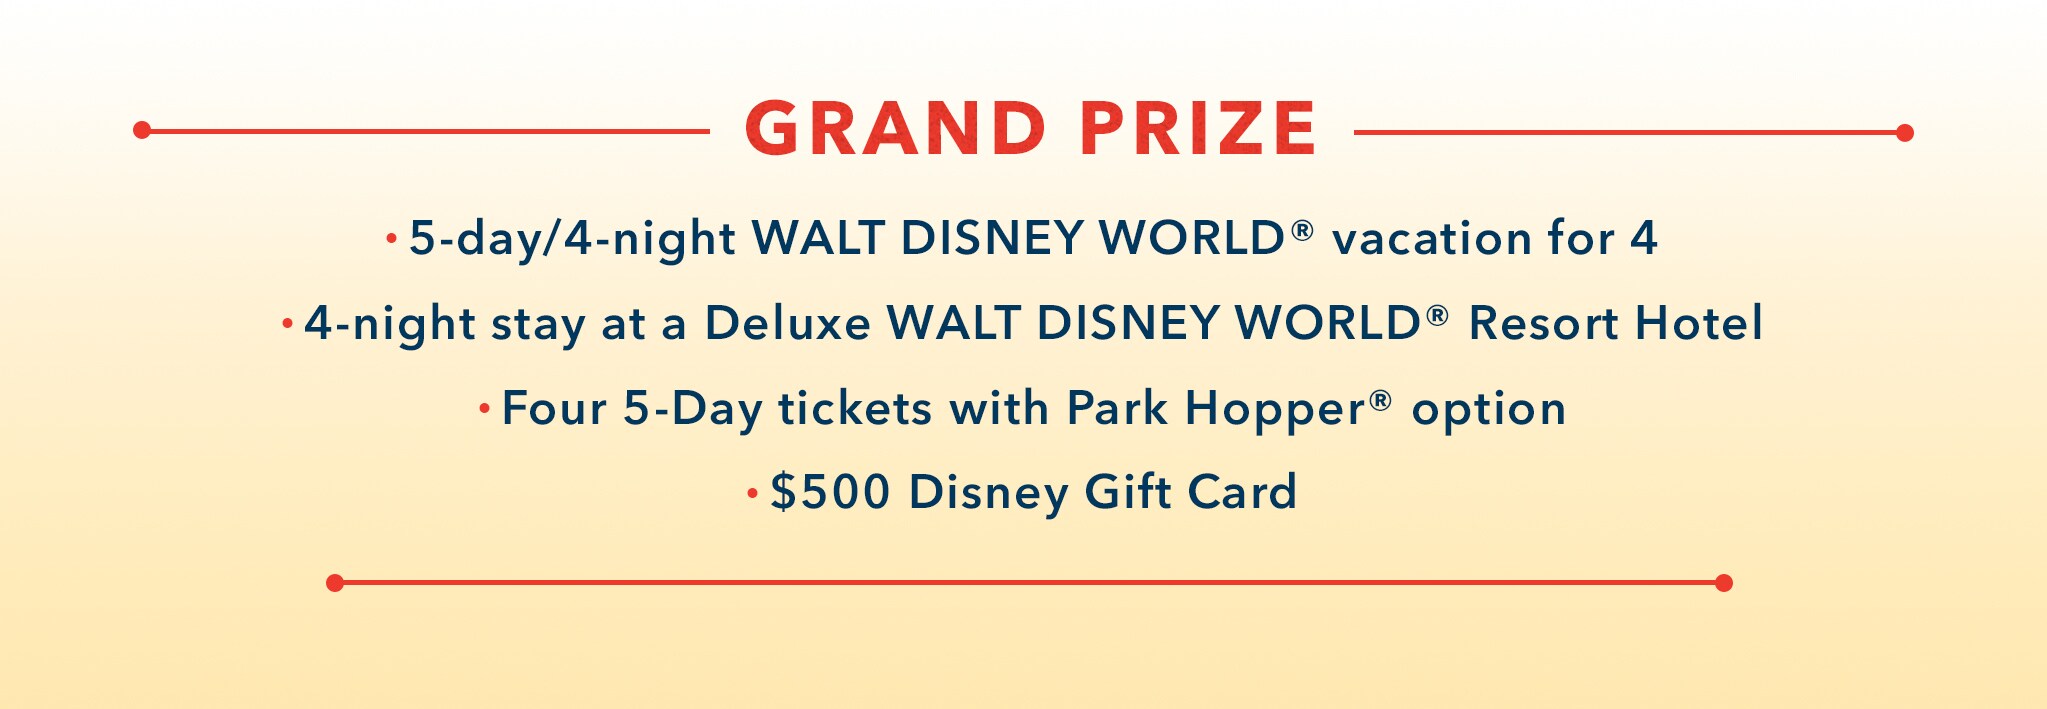 Grand Prize 5-day/4-night Walt Disney World® Vacation for 4. 4-night stay at a Deluxe Walt Disney World® Resort Hotel. Four 5-day tickets with Park Hopper® option. $500 Disney Gift Card.